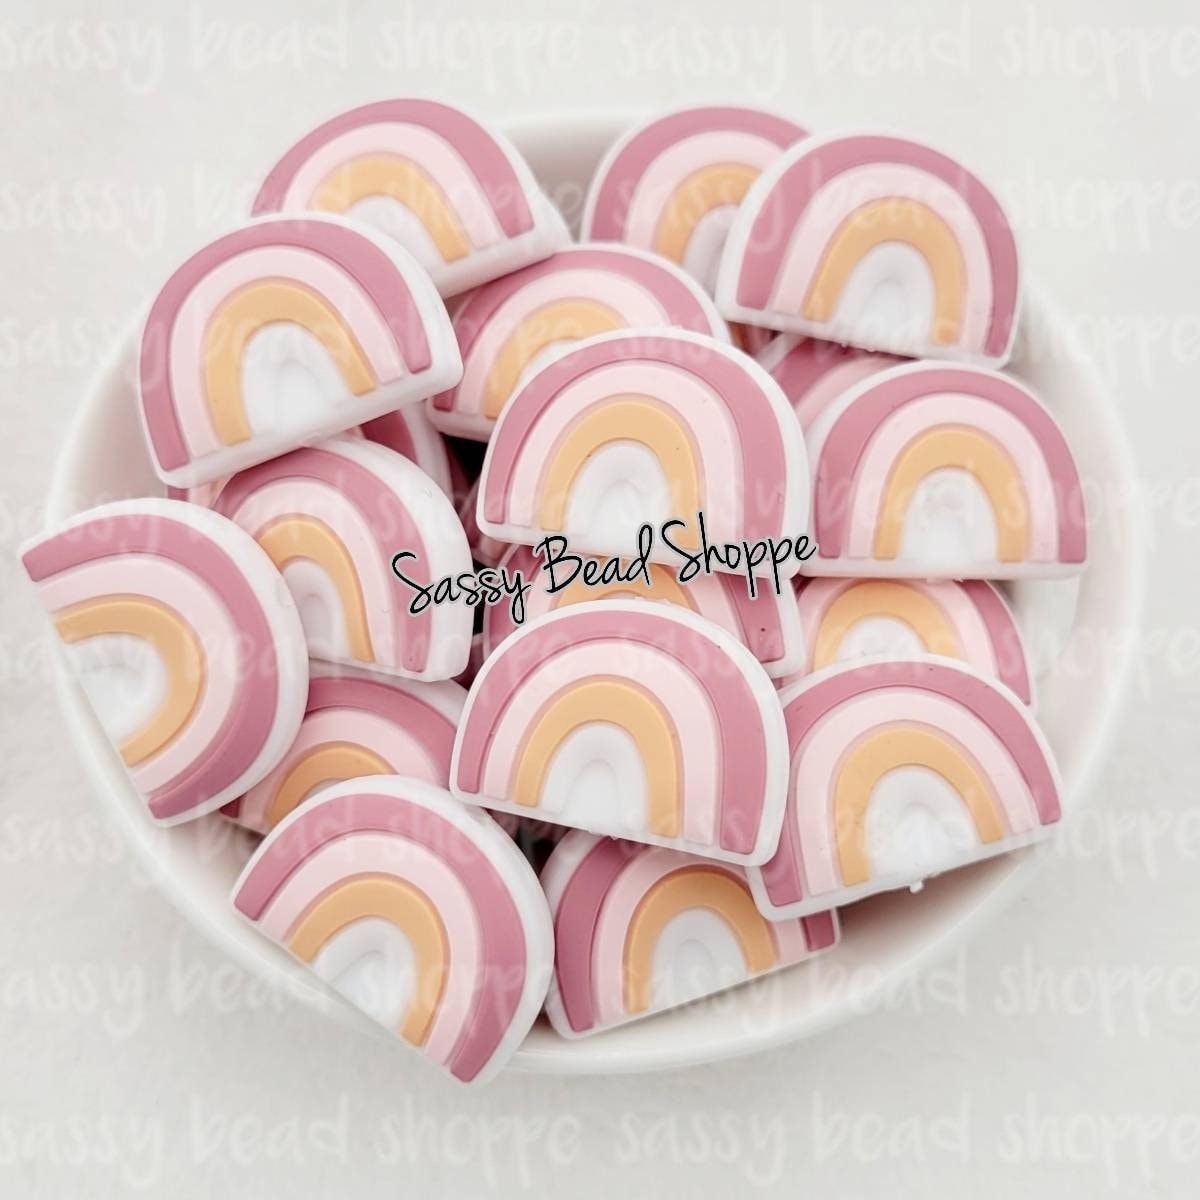 Rainbow Beads, Dusty Rose Pink Peach White